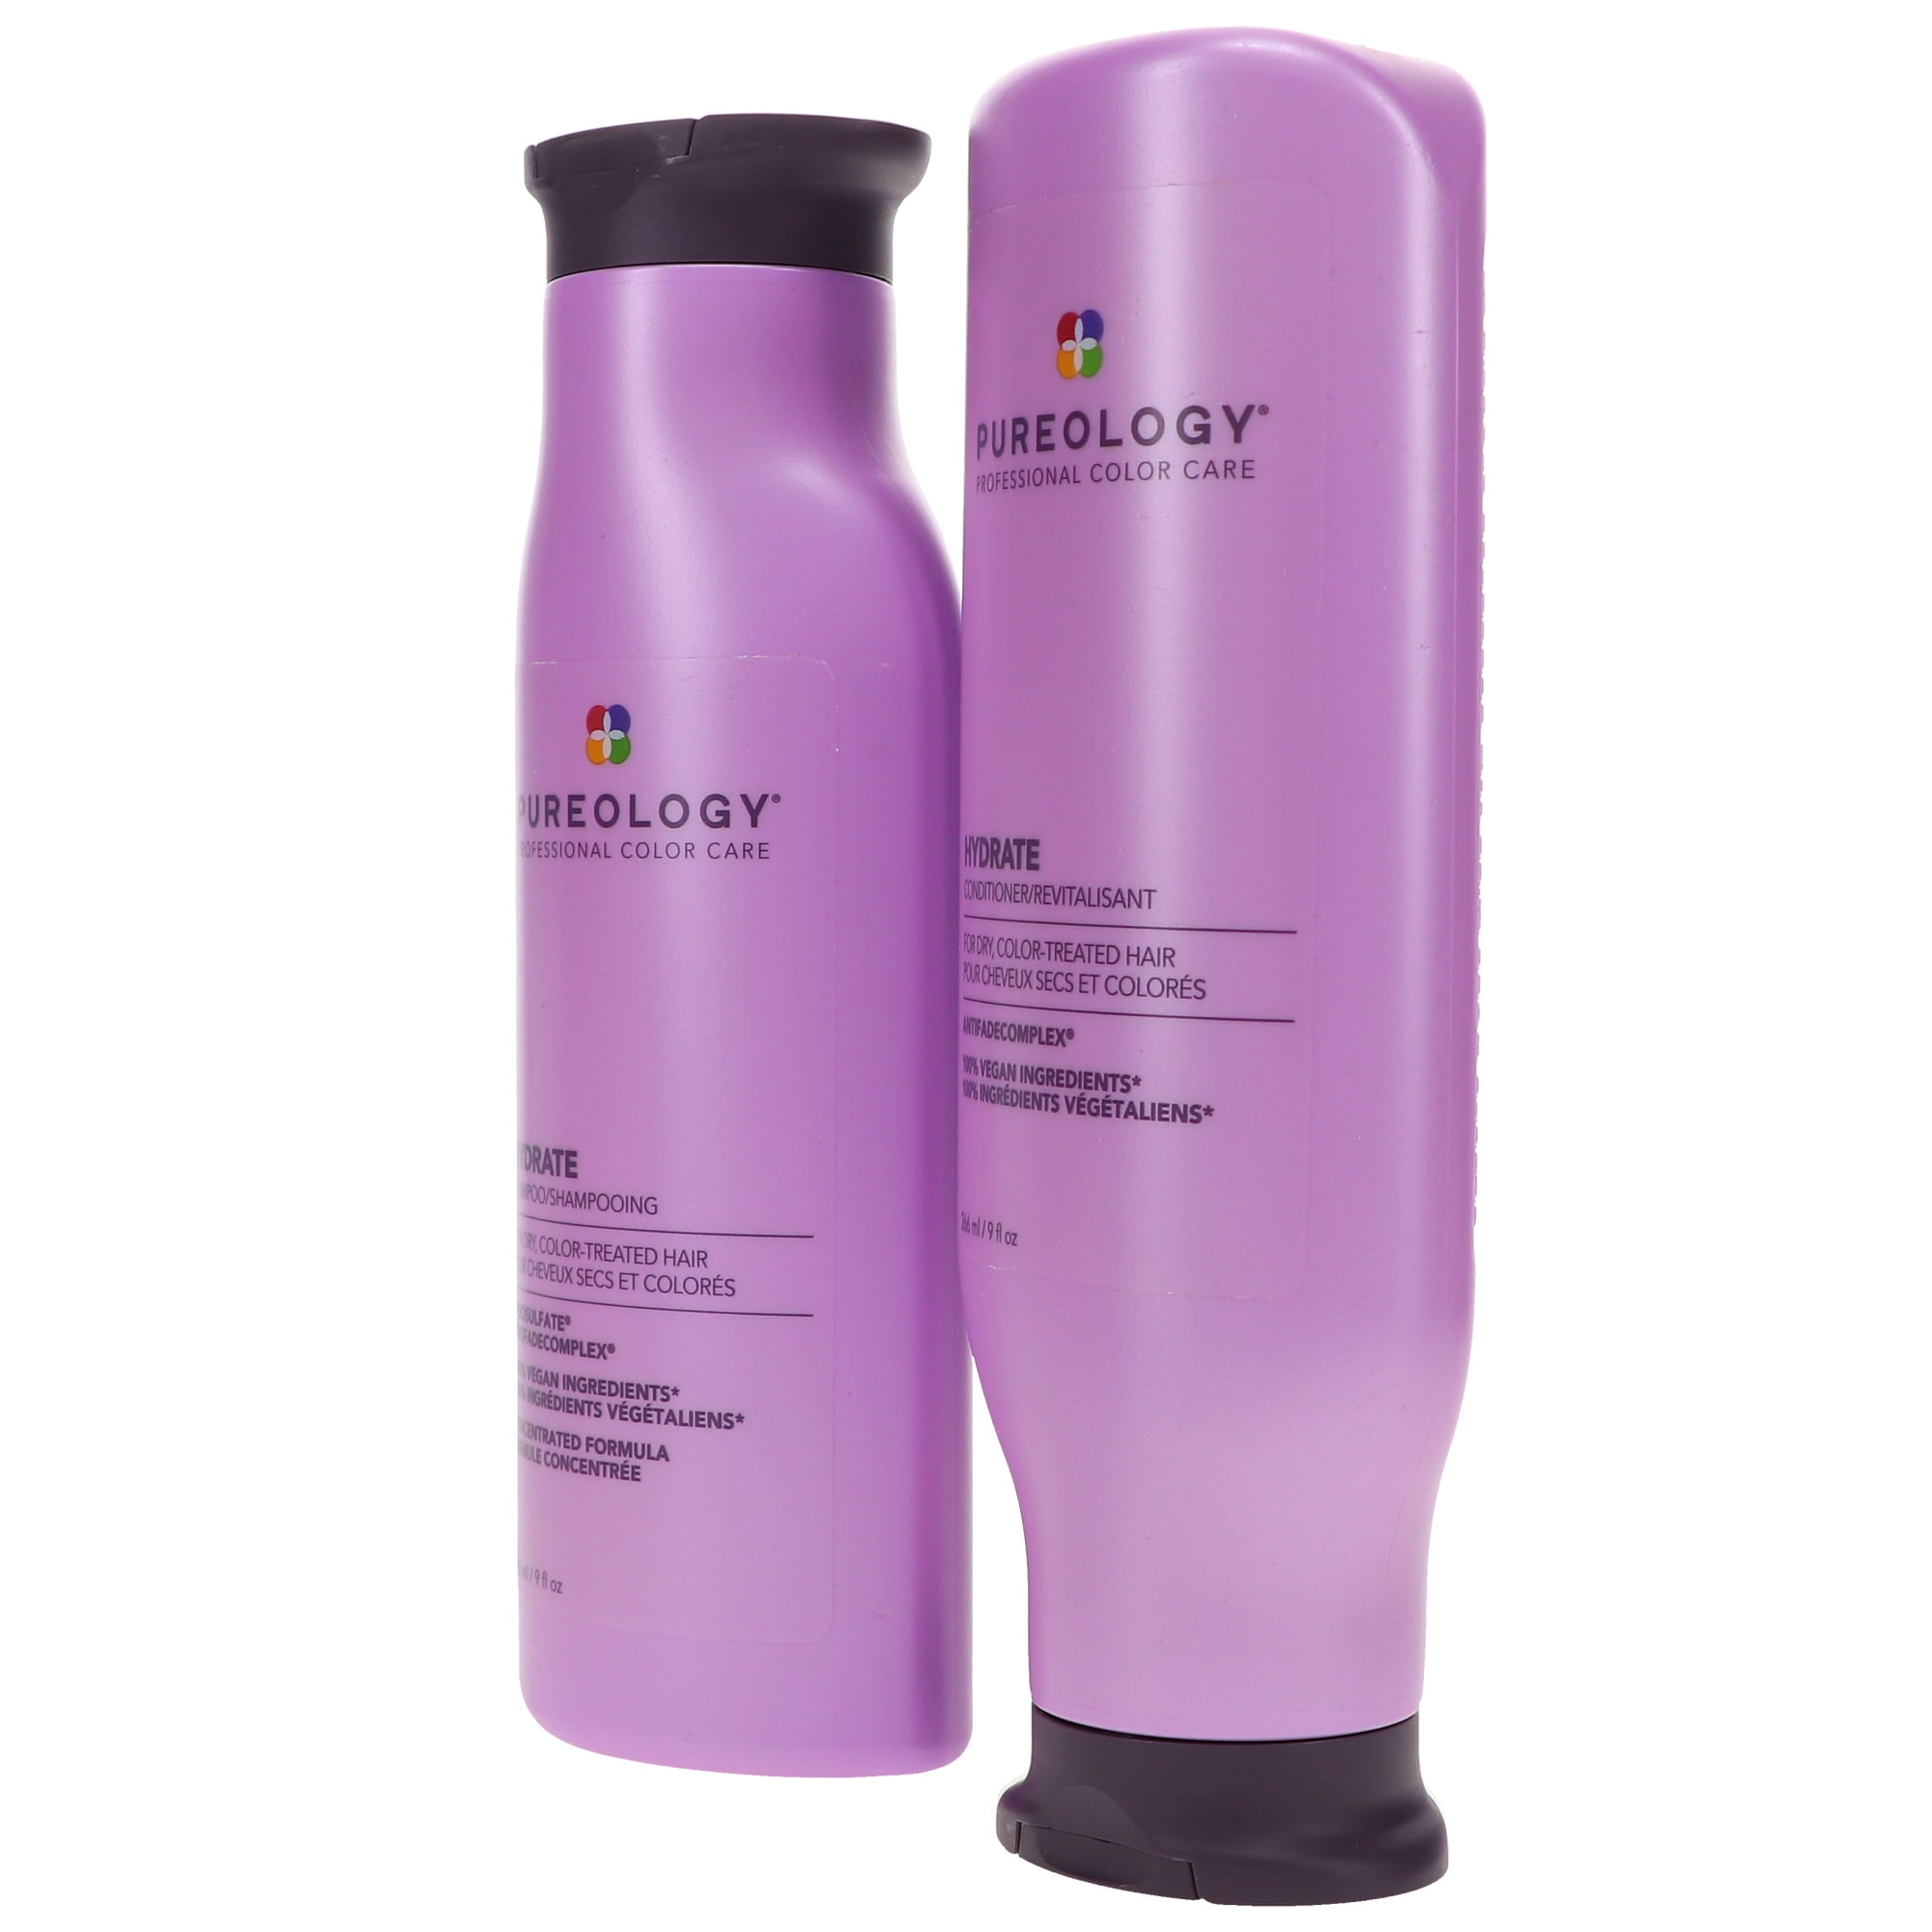 Redaktør Recept Stræbe Pureology Hydrate Shampoo & Conditioner, 9 oz Combo Pack - Walmart.com